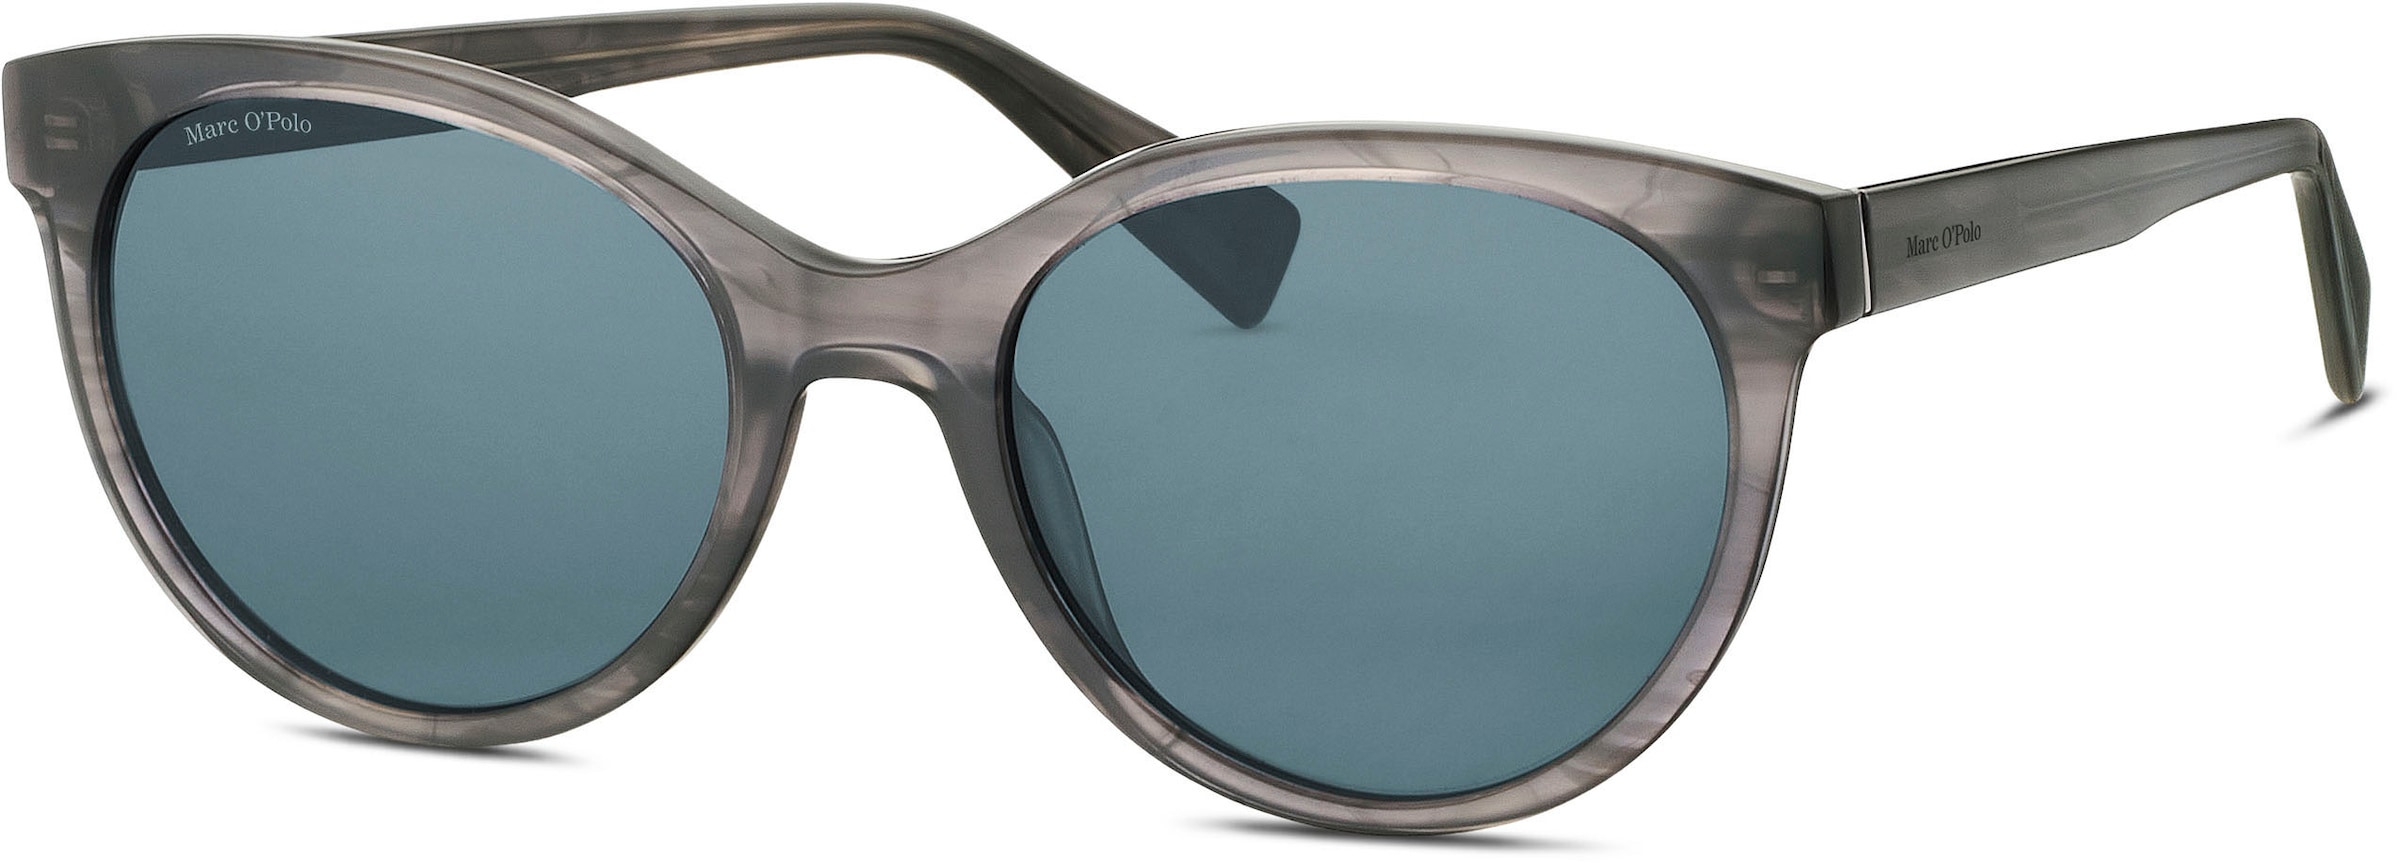 Sonnenbrille »Modell O\'Polo 506193« Marc bei